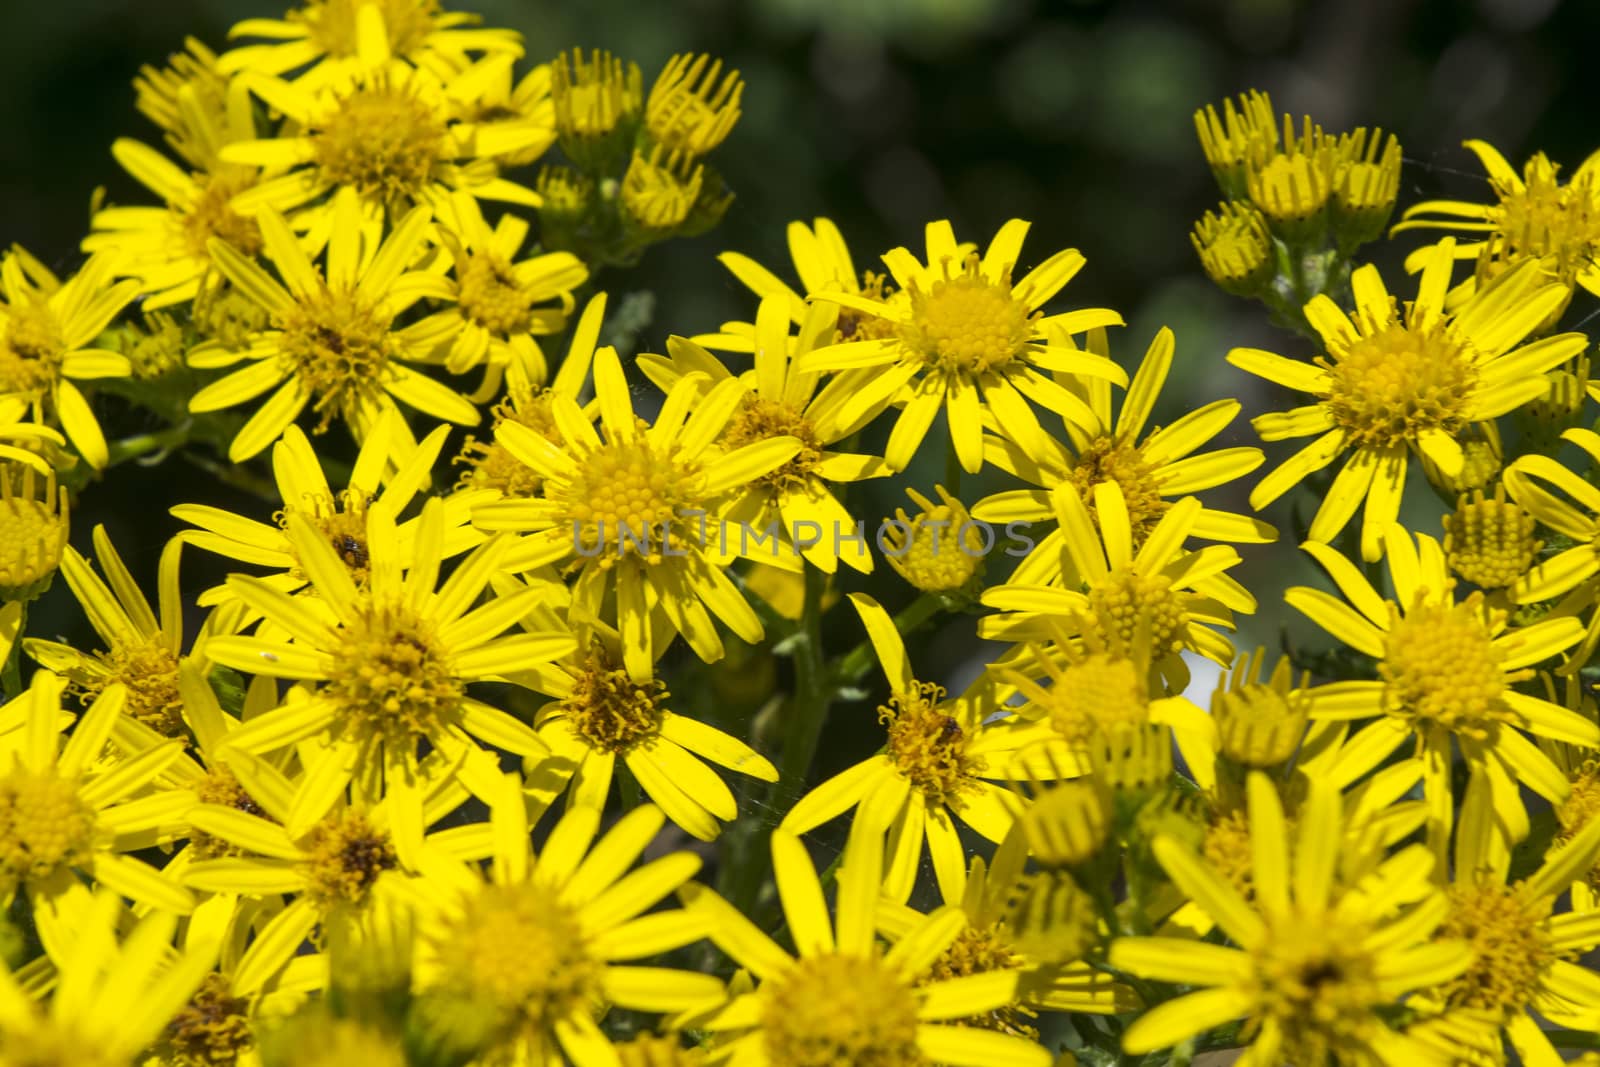 Closeup of beautiful yellow flowers in the garden